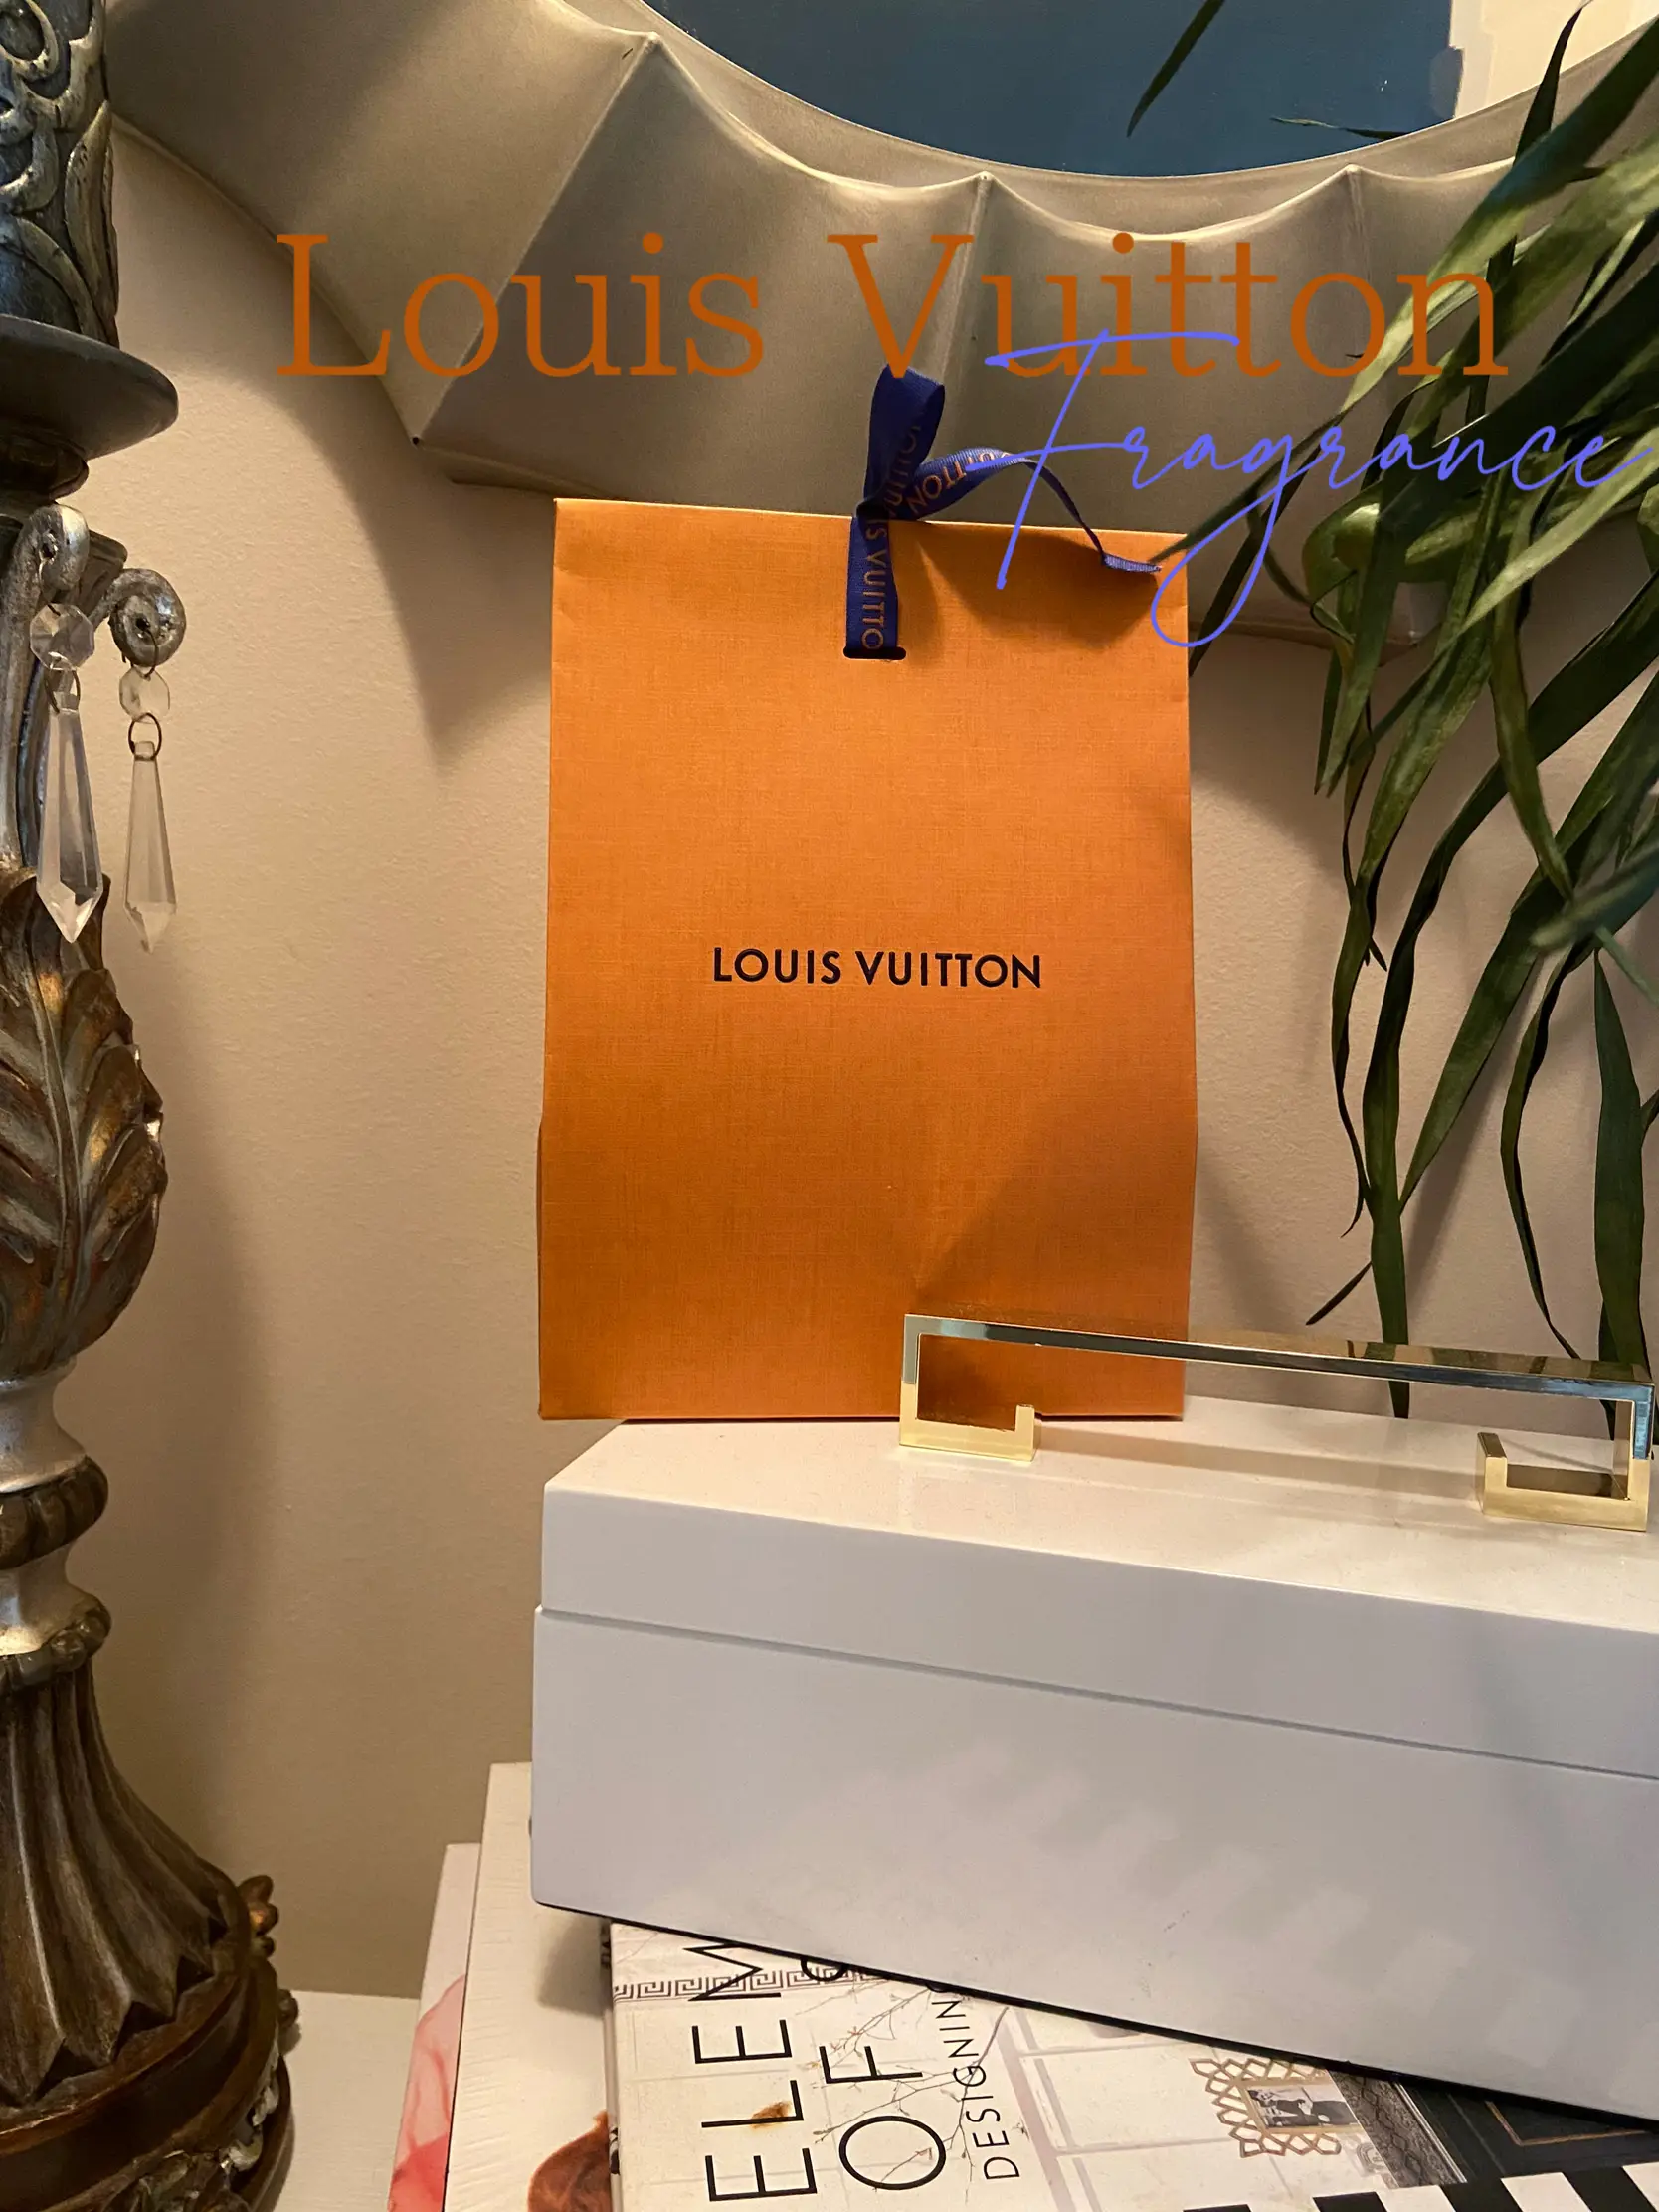 Coeur Battant 100ml Louis Vuitton LV Perfume, Beauty & Personal